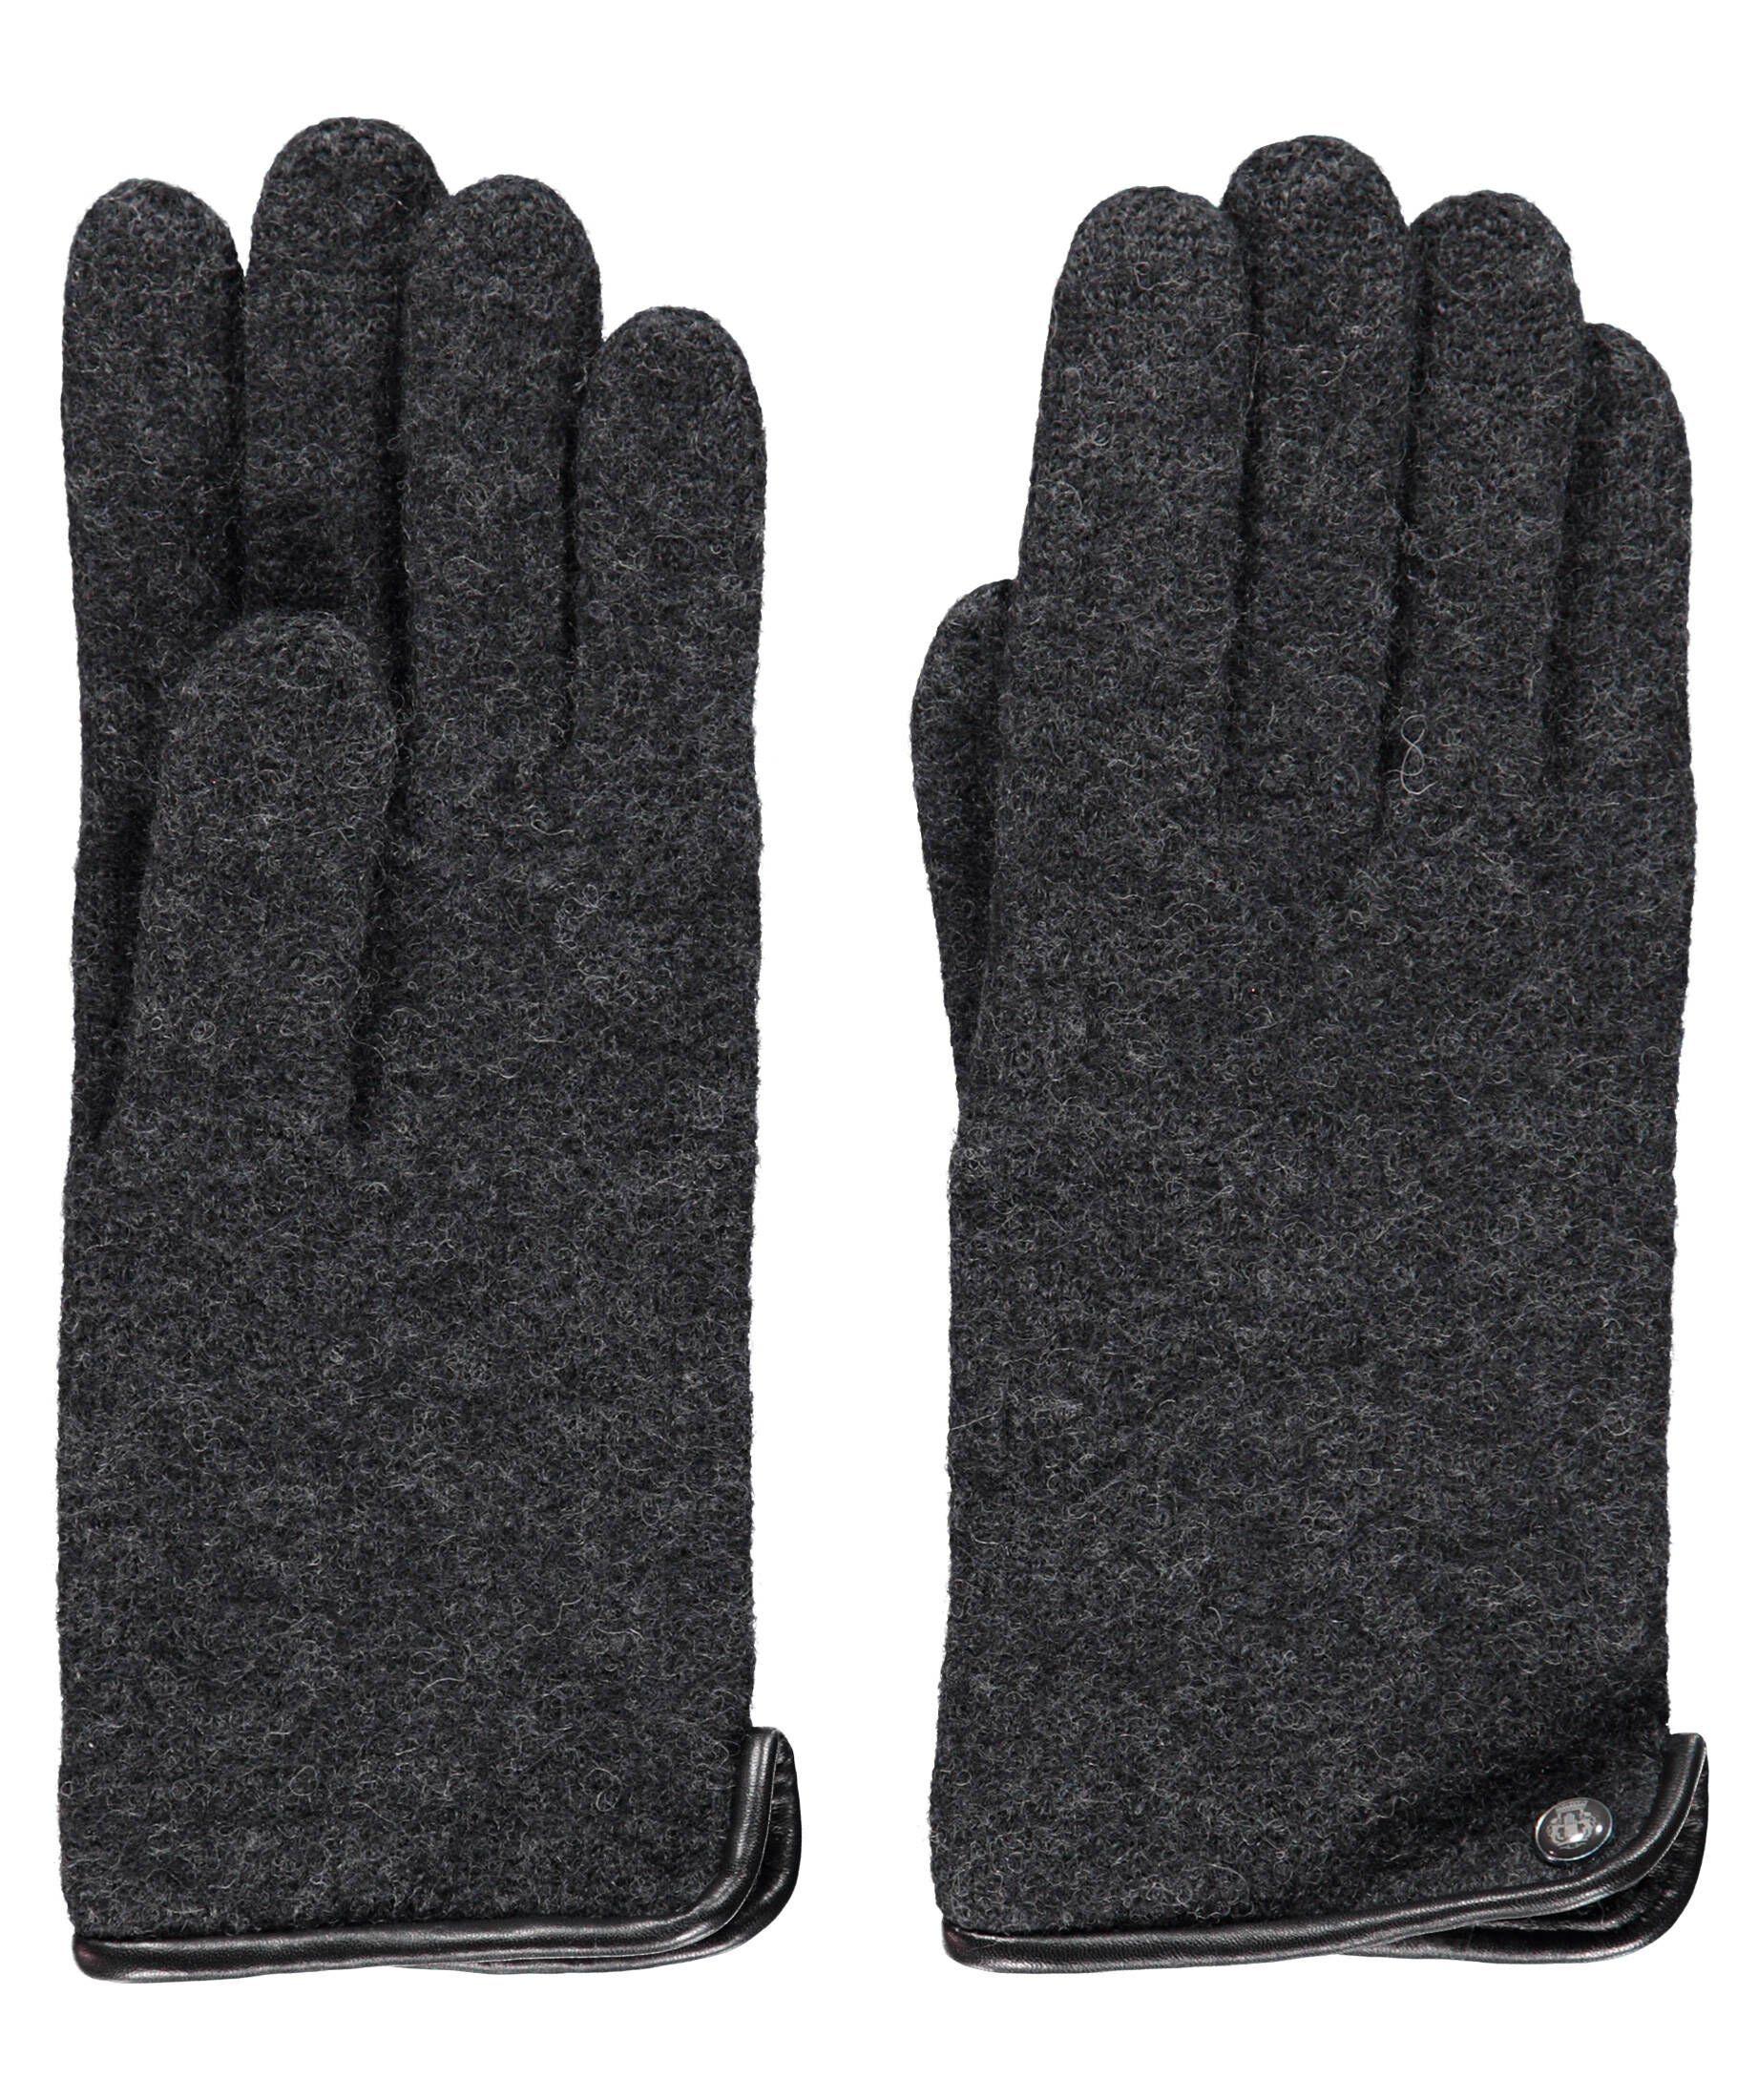 Roeckl SPORTS Laufhandschuhe Damen Handschuhe anthrazit (14)